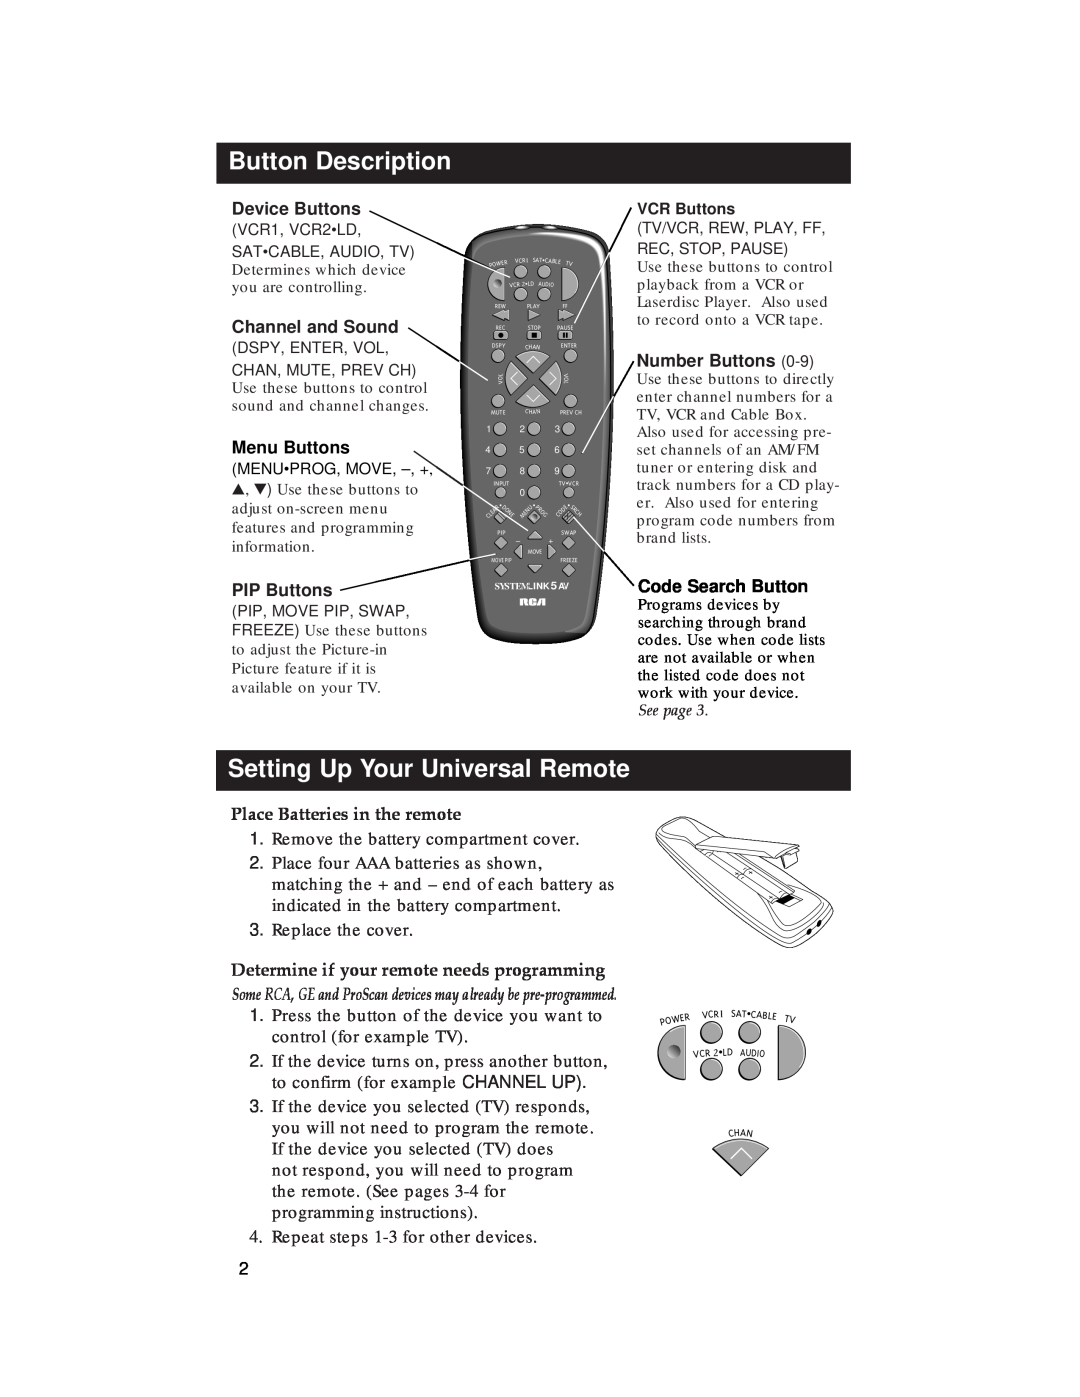 RCA RCU500 warranty Button Description, Setting Up Your Universal Remote, Device Buttons, Channel and Sound, Menu Buttons 